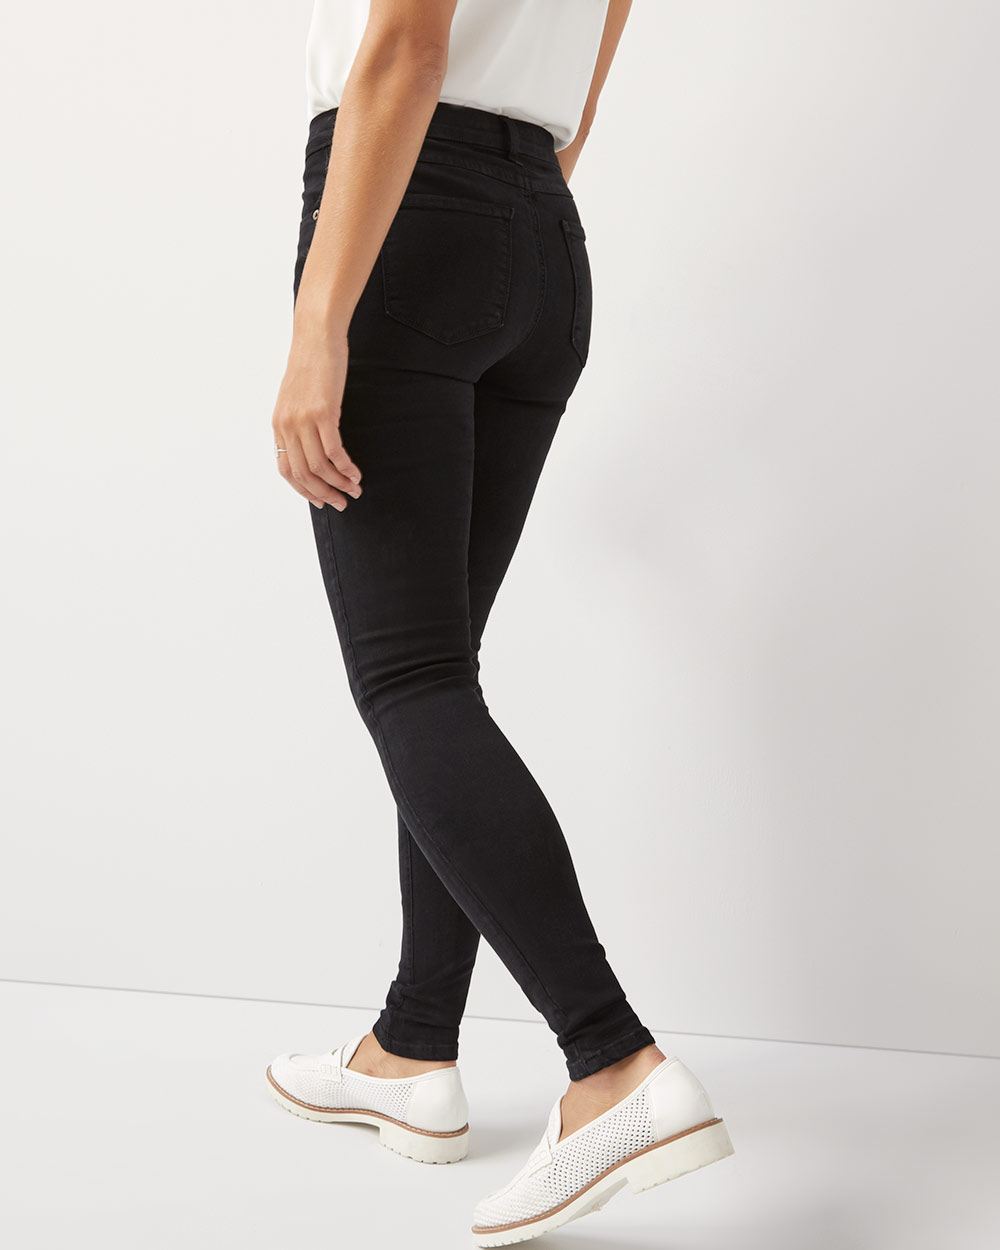 High-rise Skinny Yoga Jeans TM in black denim | RW&CO.